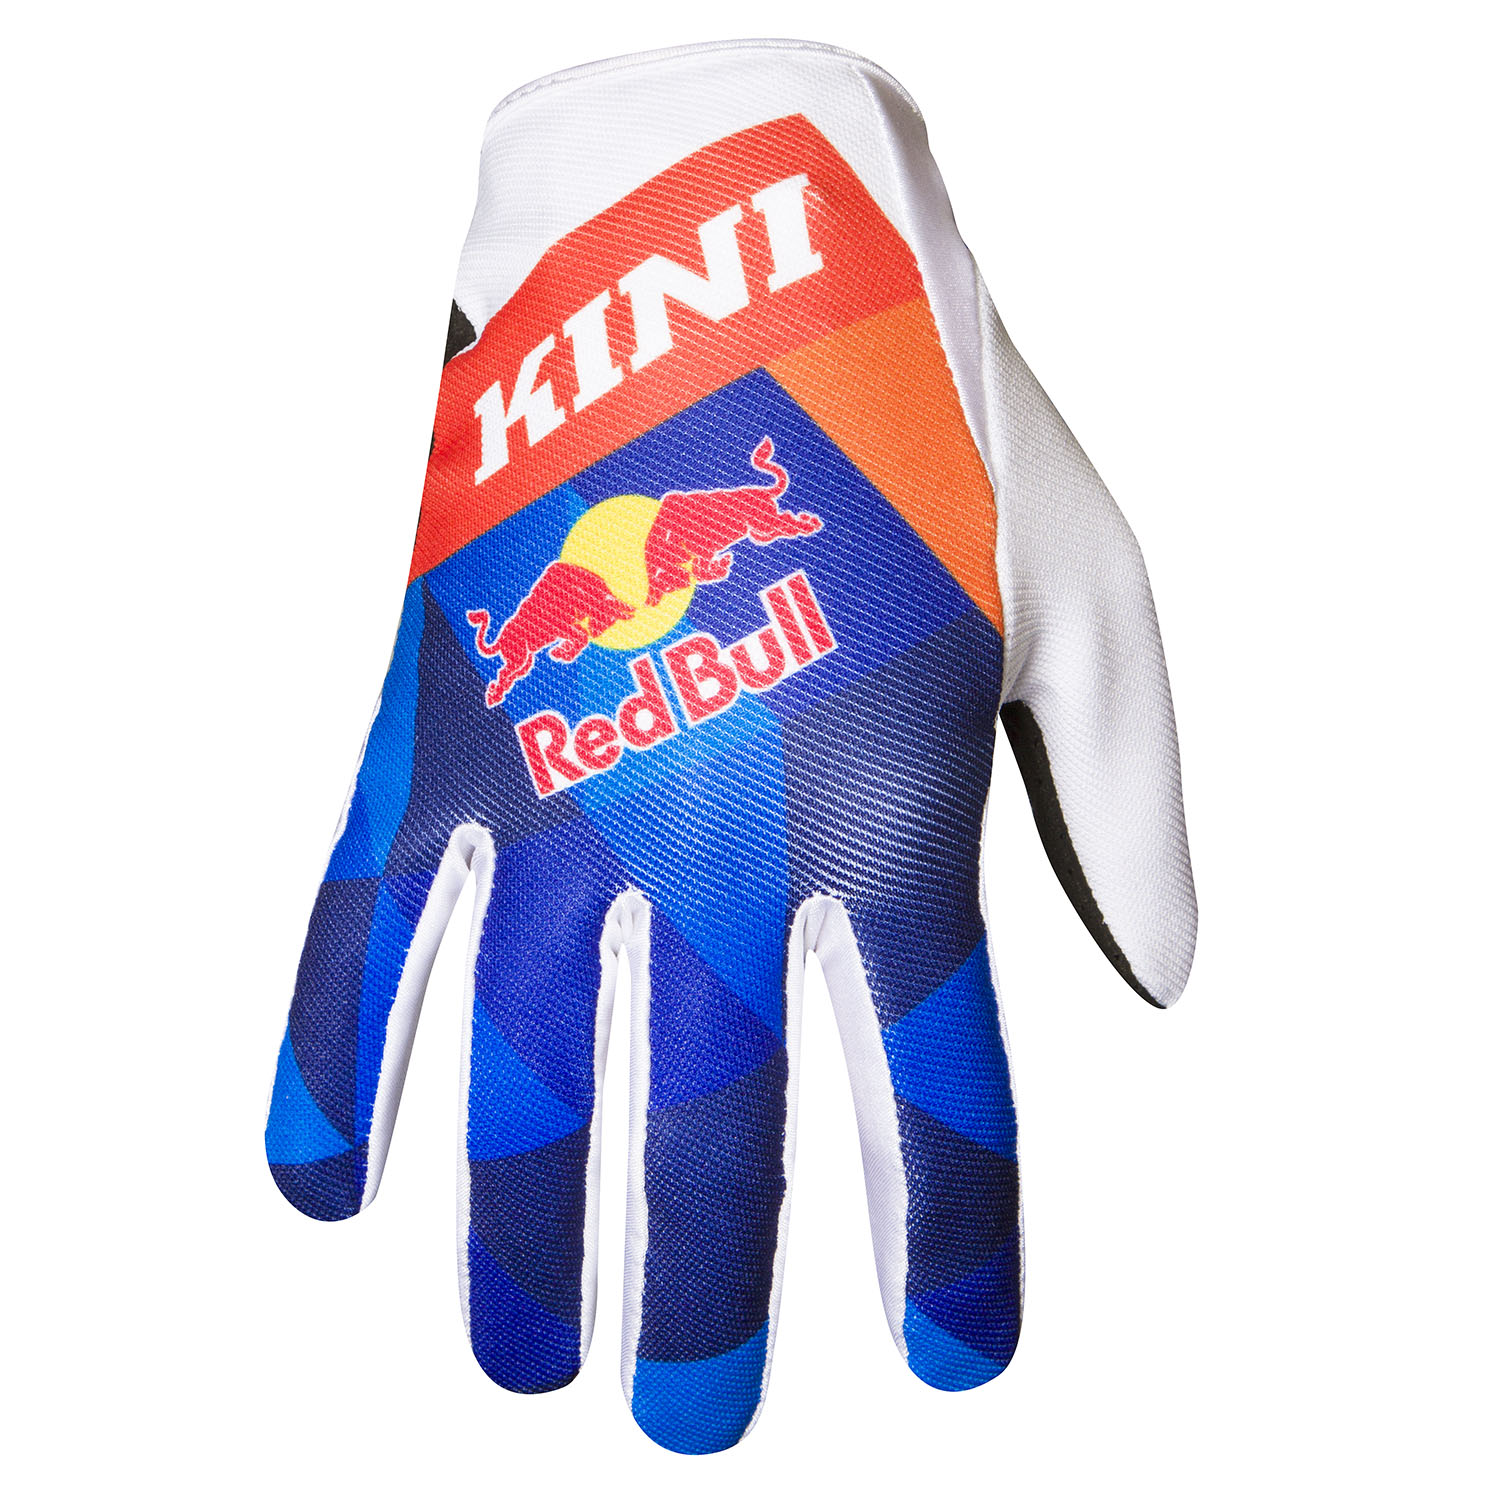 Kini Red Bull Gloves Vintage Orange/Blue